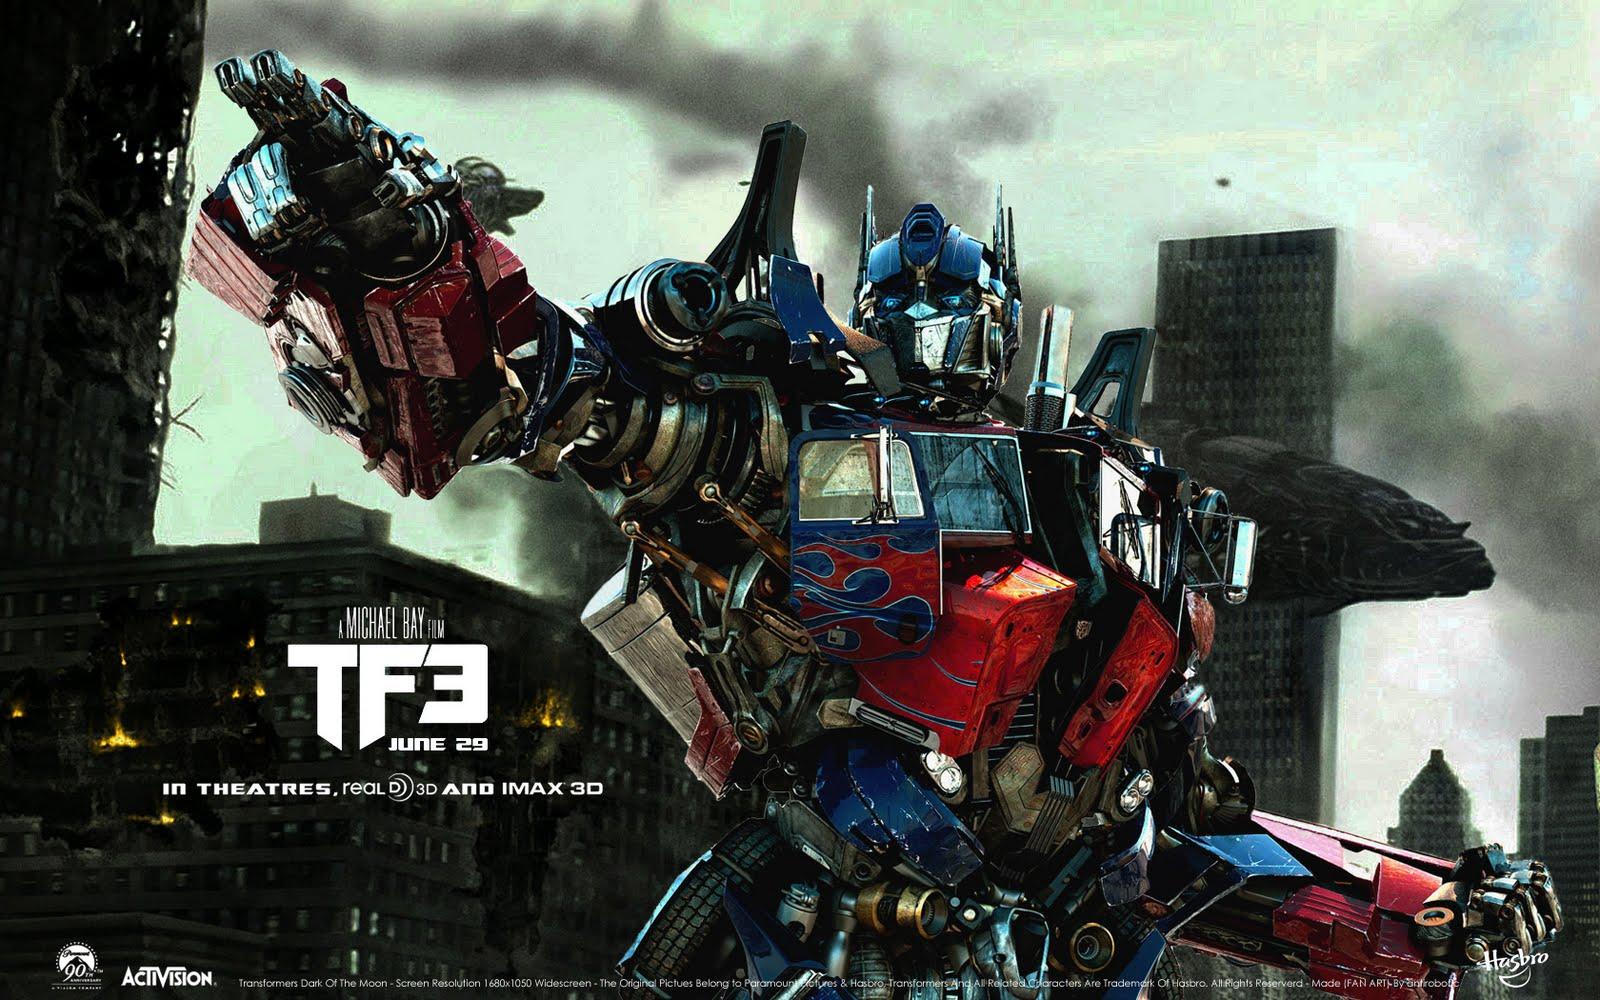 image For > Transformers 3 Optimus Prime Wallpaper